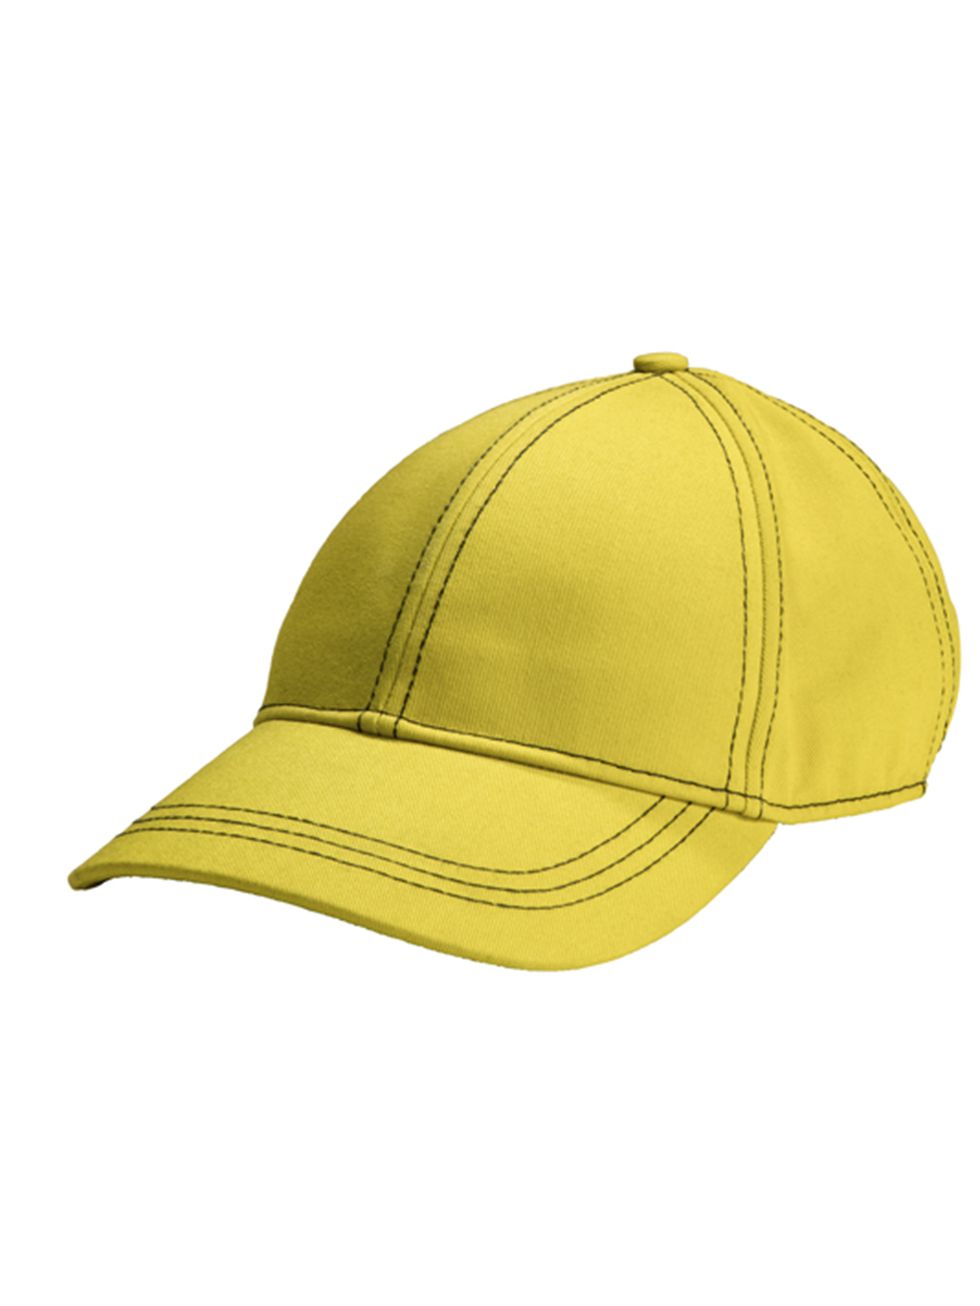 Cap, Clothing, Yellow, Green, Baseball cap, Cricket cap, Headgear, Fashion accessory, Material property, Hat, 